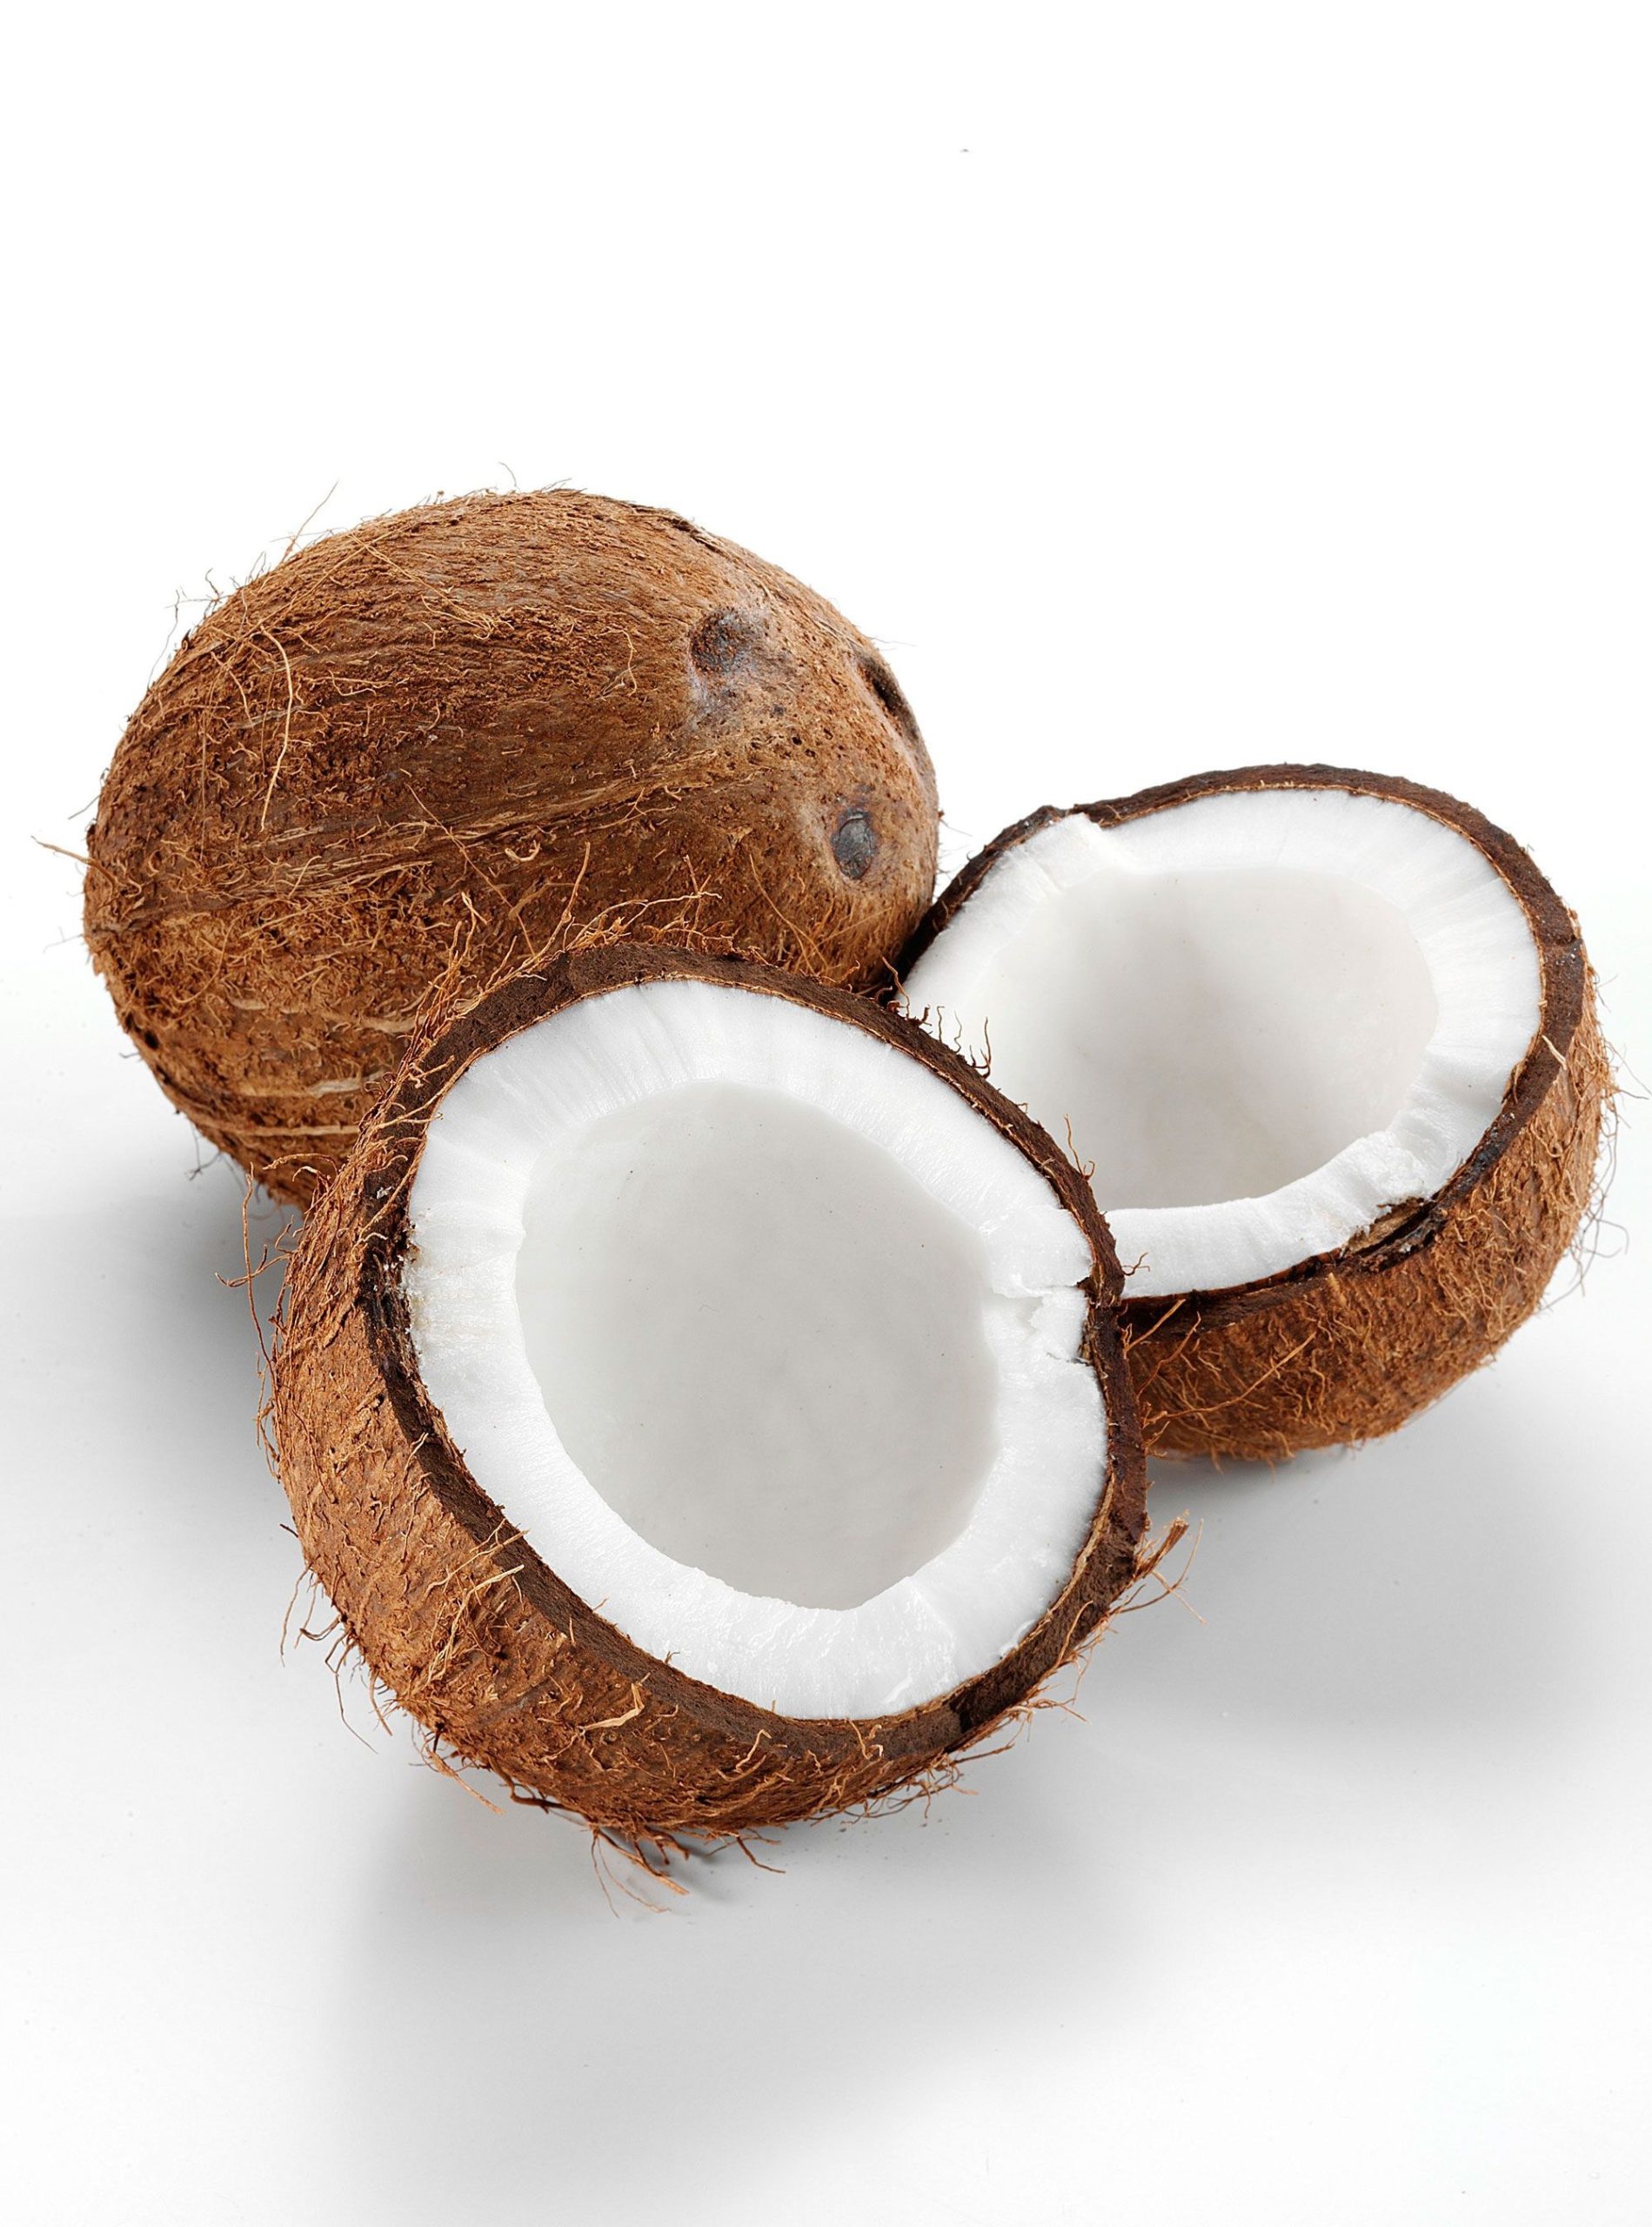  Coconut oil